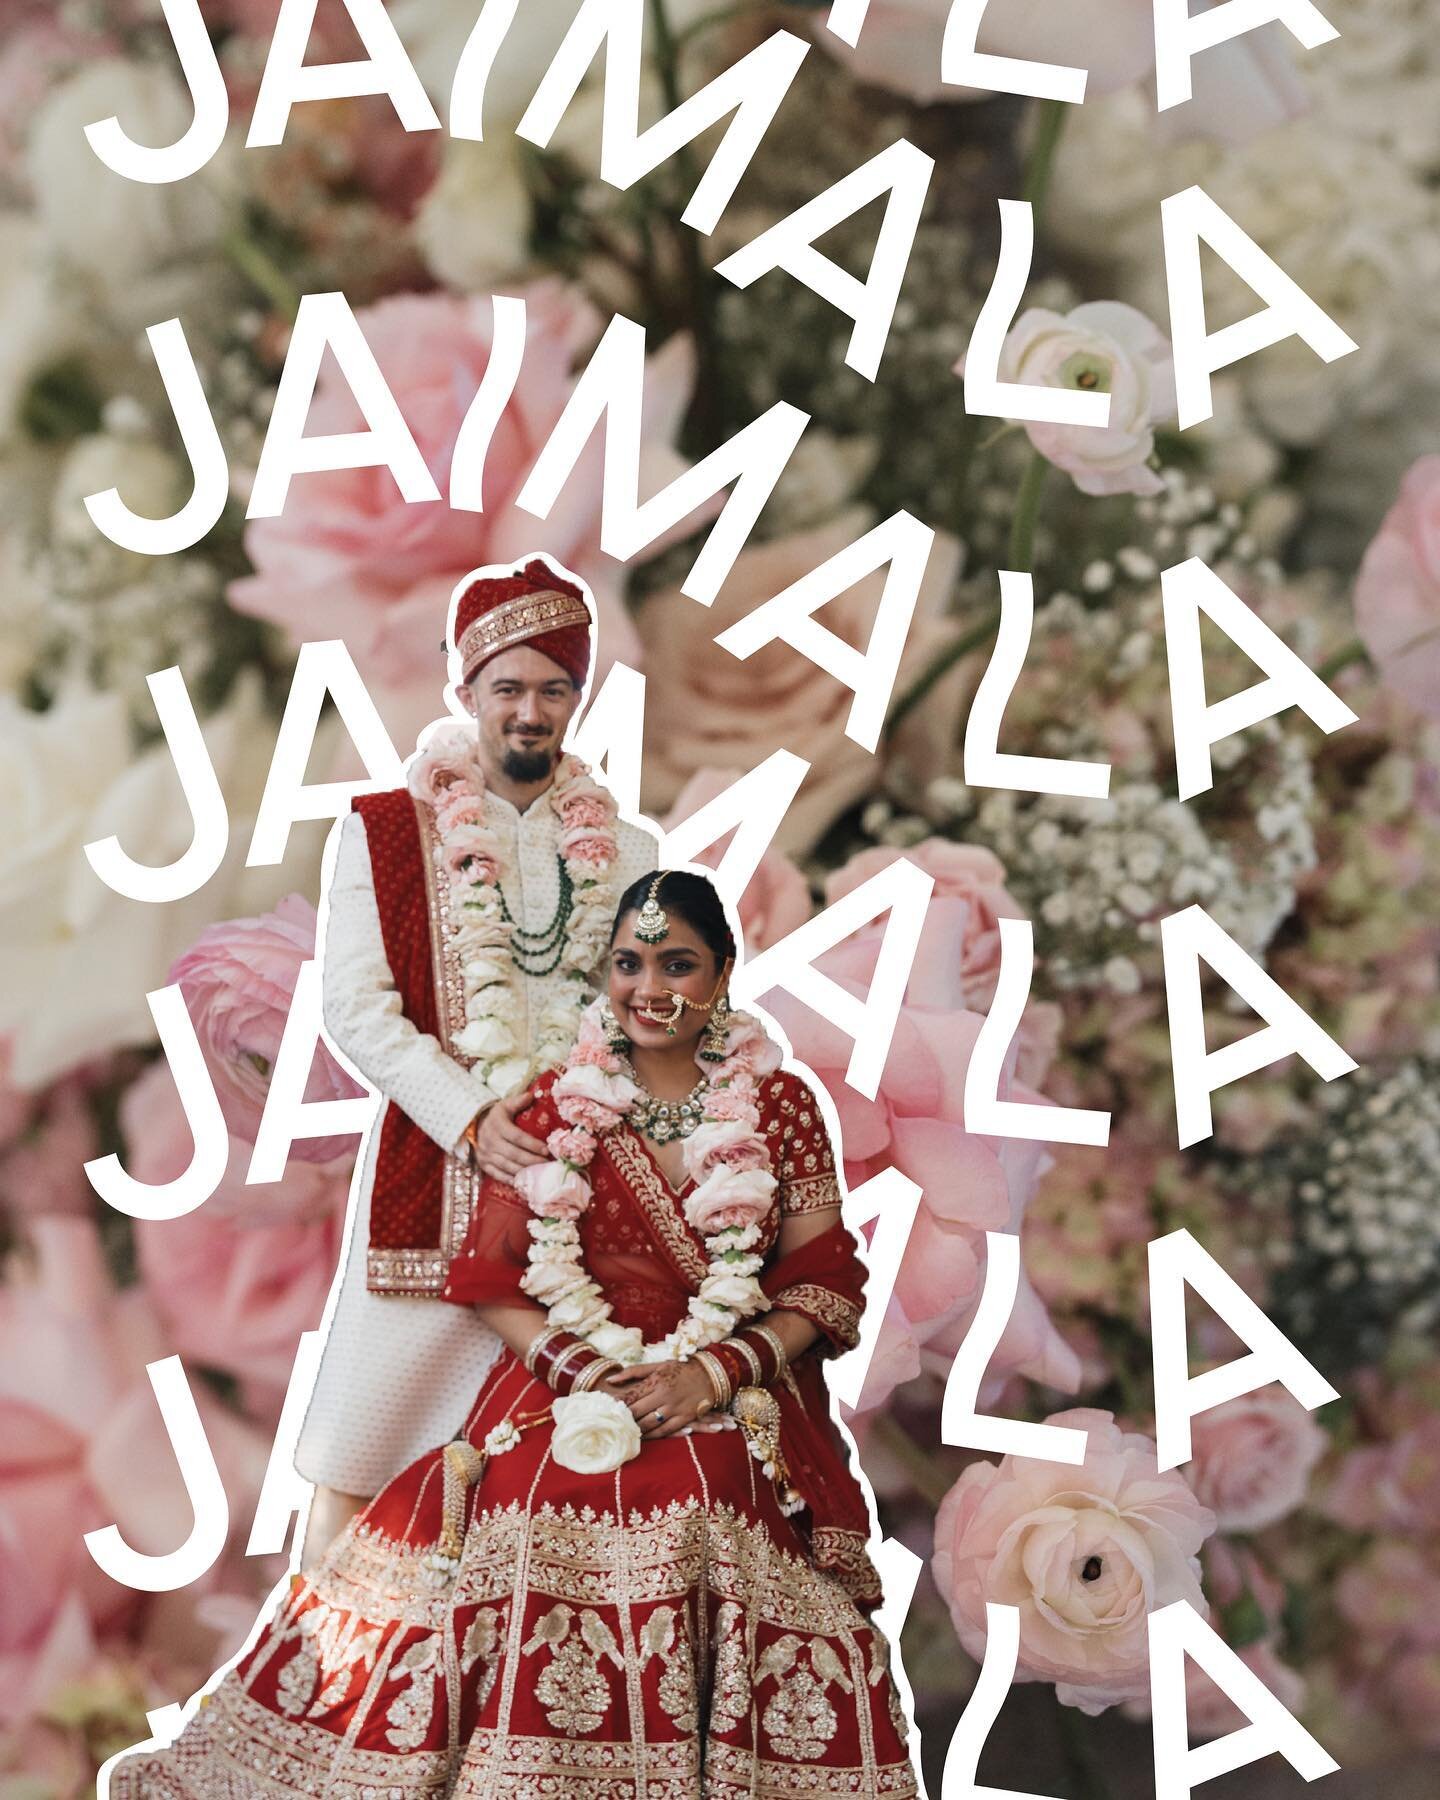 jaimalas are one of my absolute favorite things to design 💫

Photographers by image: 
1. @jfierberg 
2 @laurenfinchphotography 
3 @samantha.ruscher.photo 
4 @jennawrenphotography 

#jaimala #indianwedding #hinduwedding #denverwedding #denverflorals 